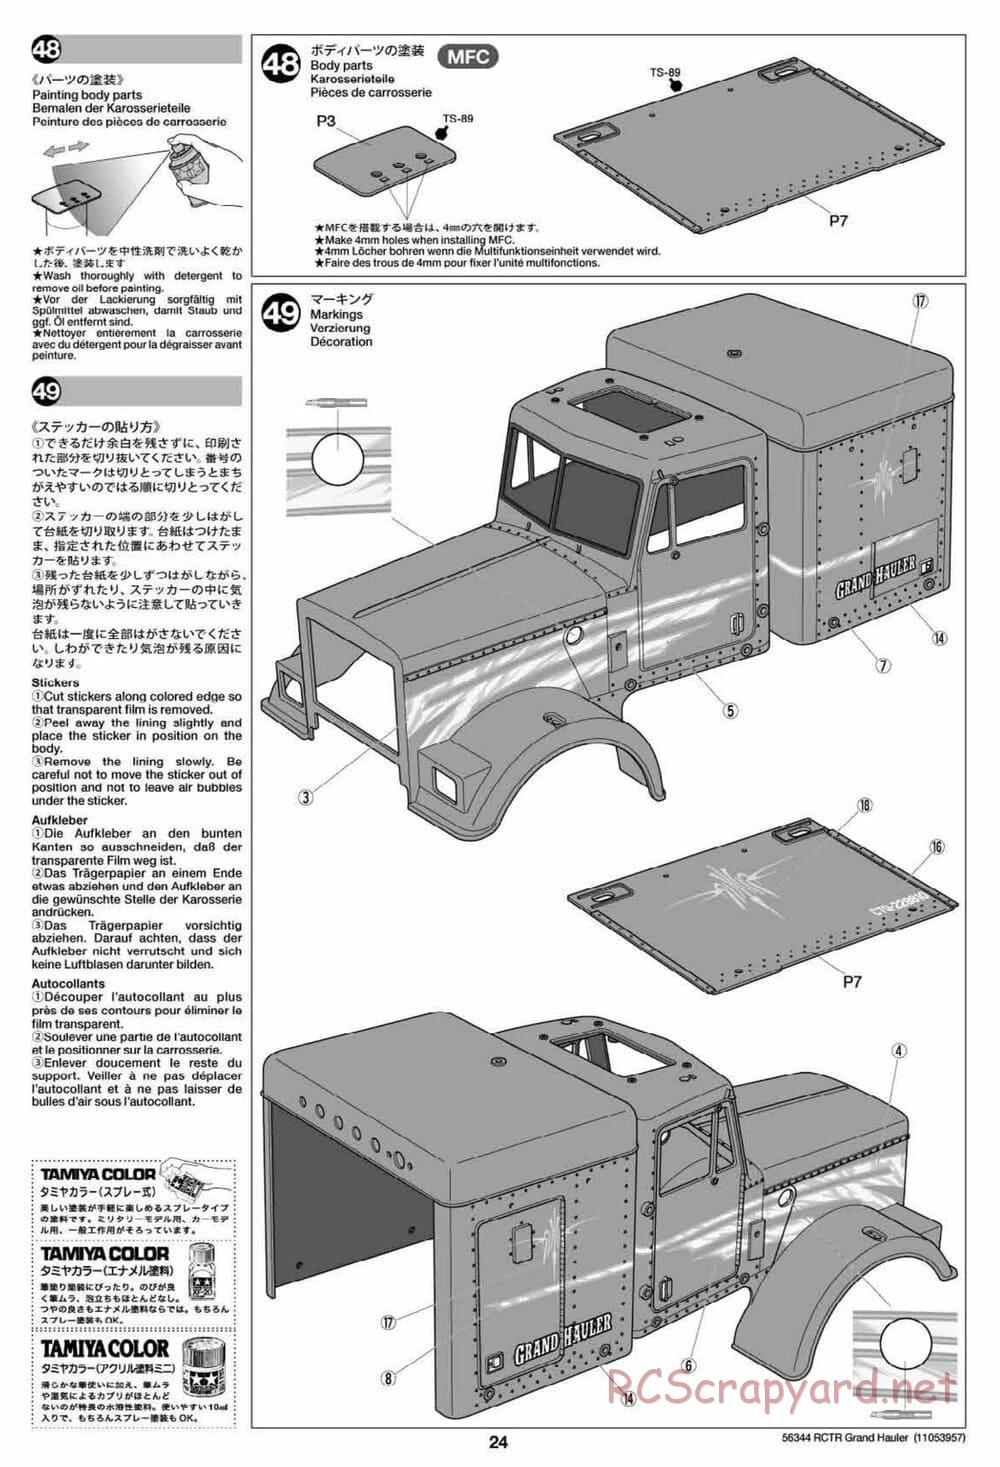 Tamiya - Grand Hauler Tractor Truck Chassis - Manual - Page 24